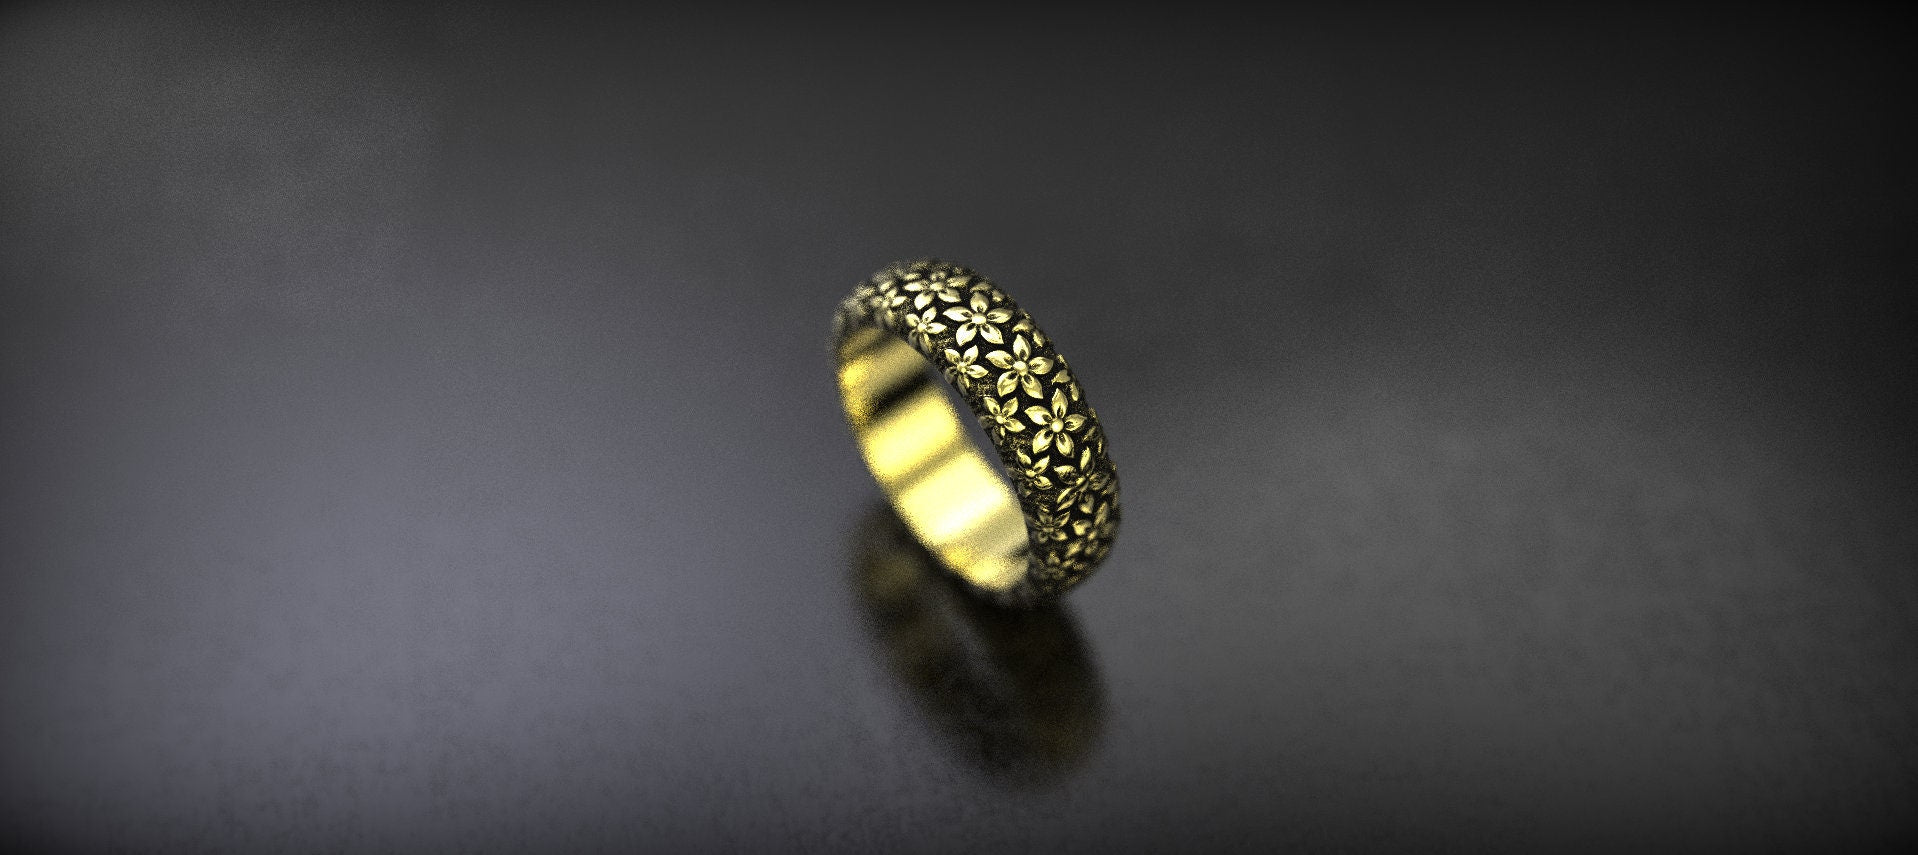 Gold Flower Engagement Ring